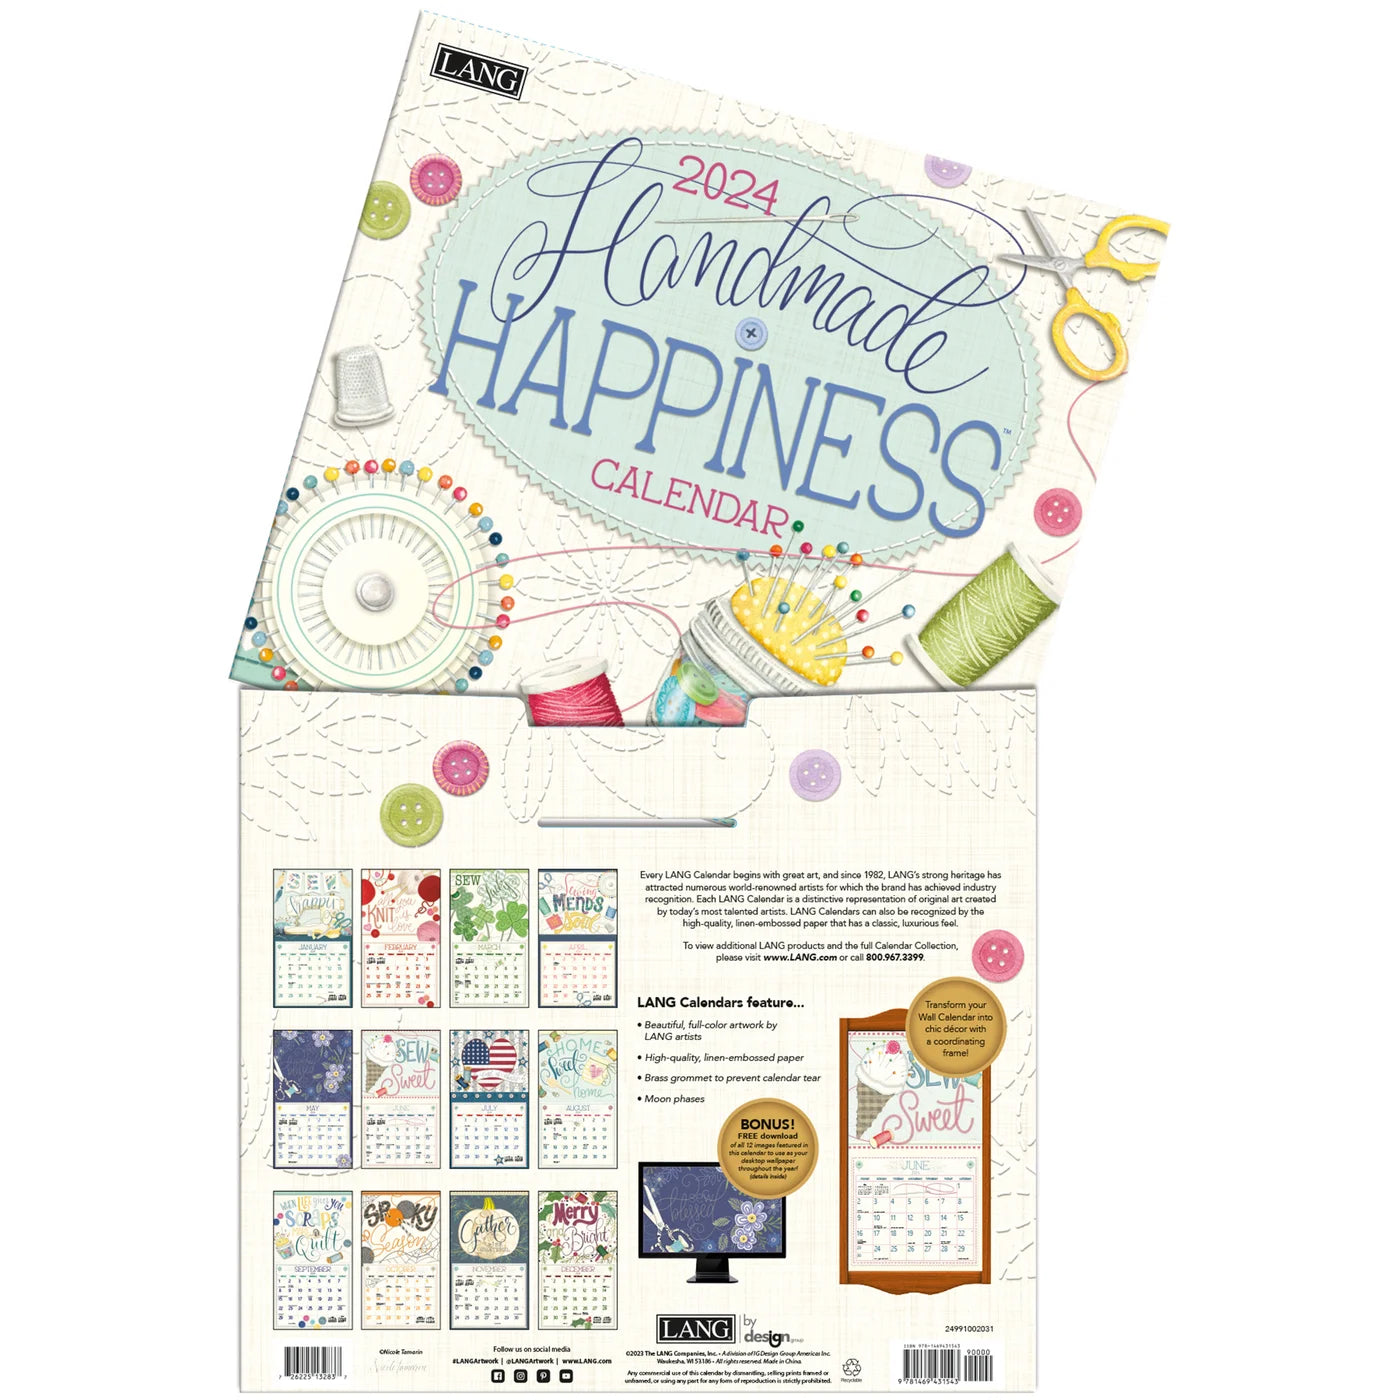 2024 LANG Handmade Happiness By Nicole Tamarin - Deluxe Wall Calendar